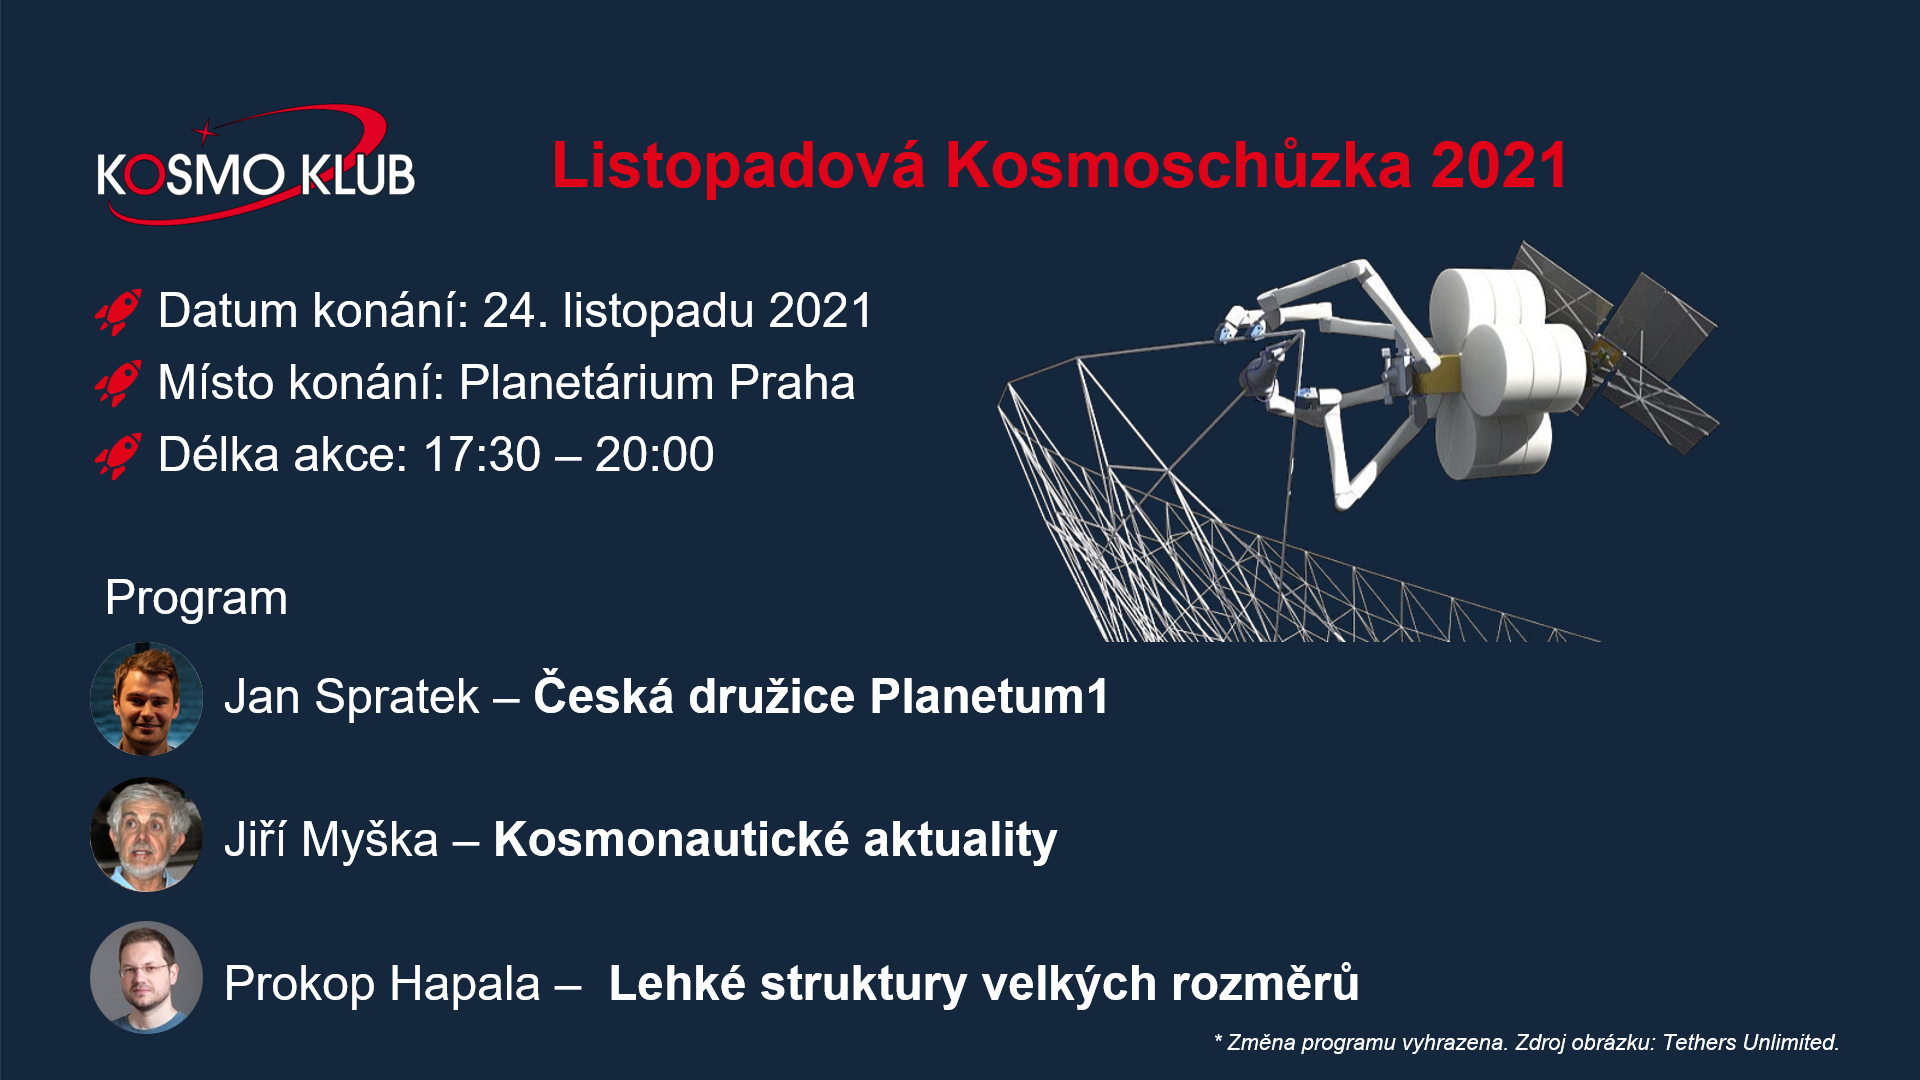 IMG:https://klub.kosmo.cz/domains/klub.kosmo.cz/index.php?q=system/files/Kosmoschuzka-11-2021.png